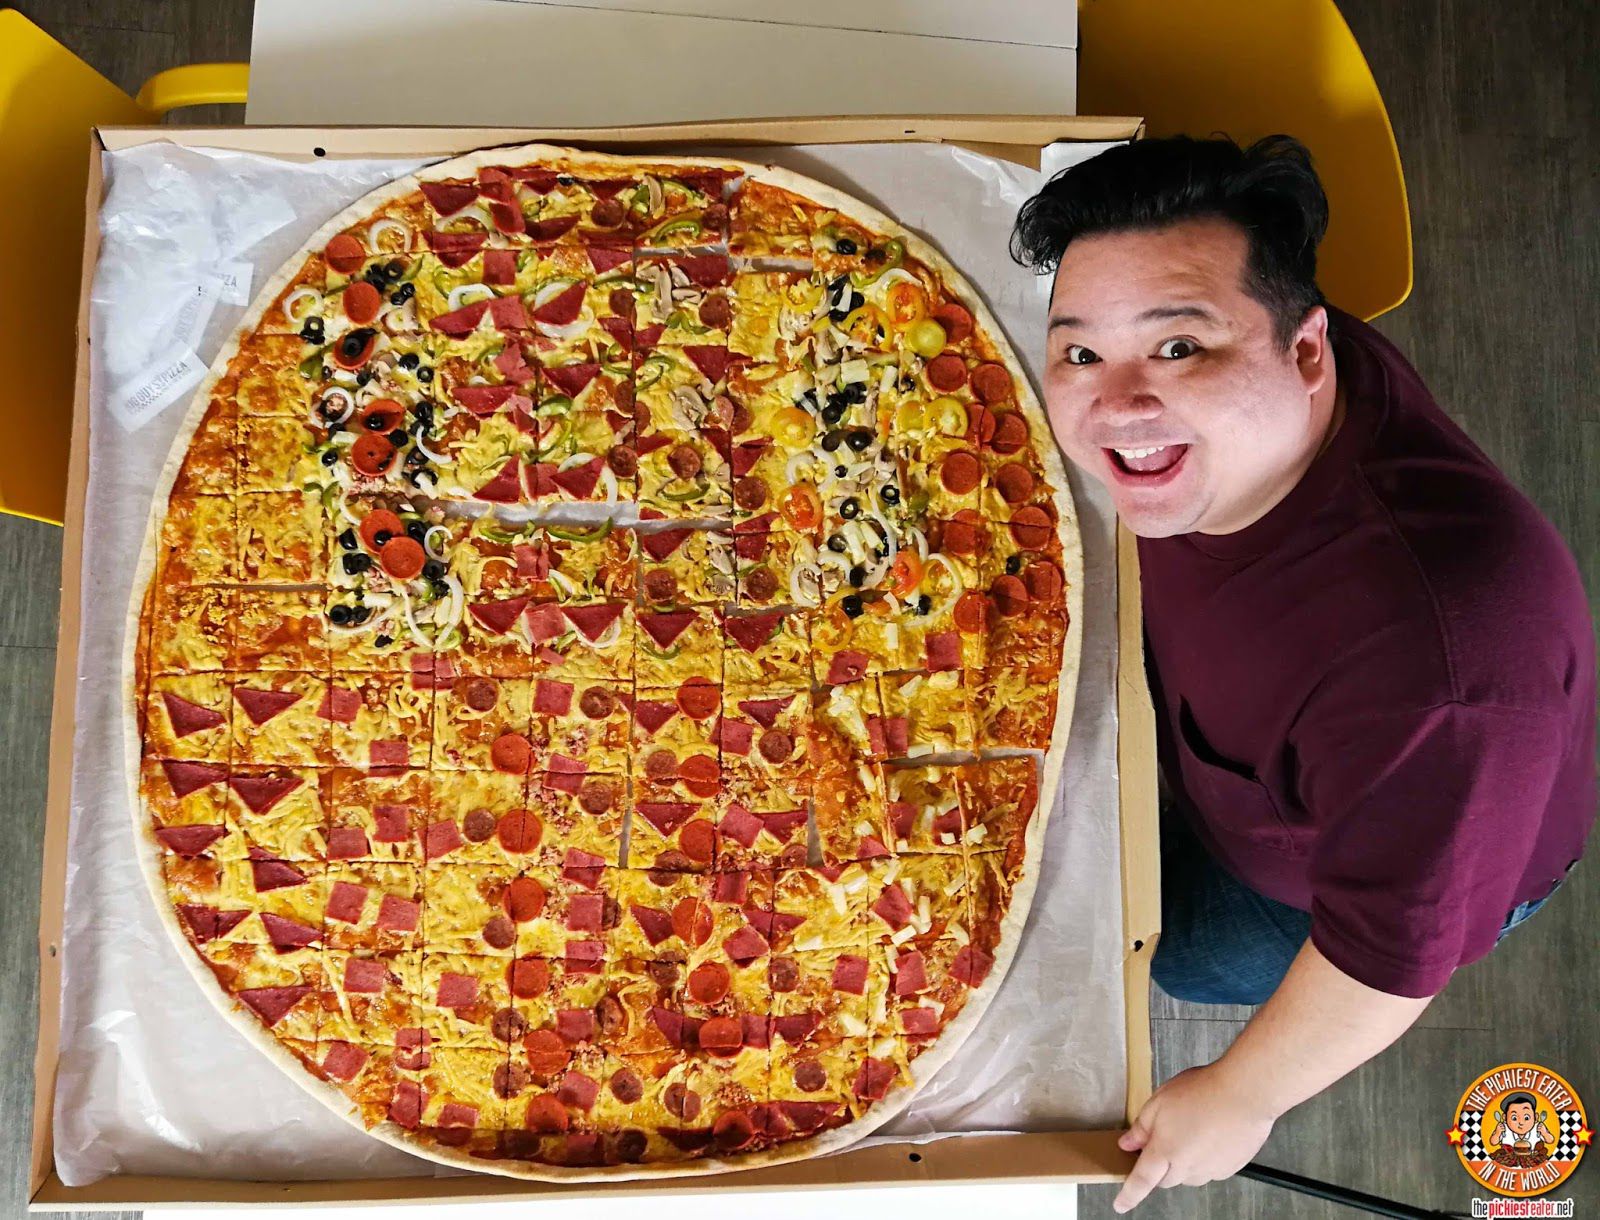 Big Guys Pizza